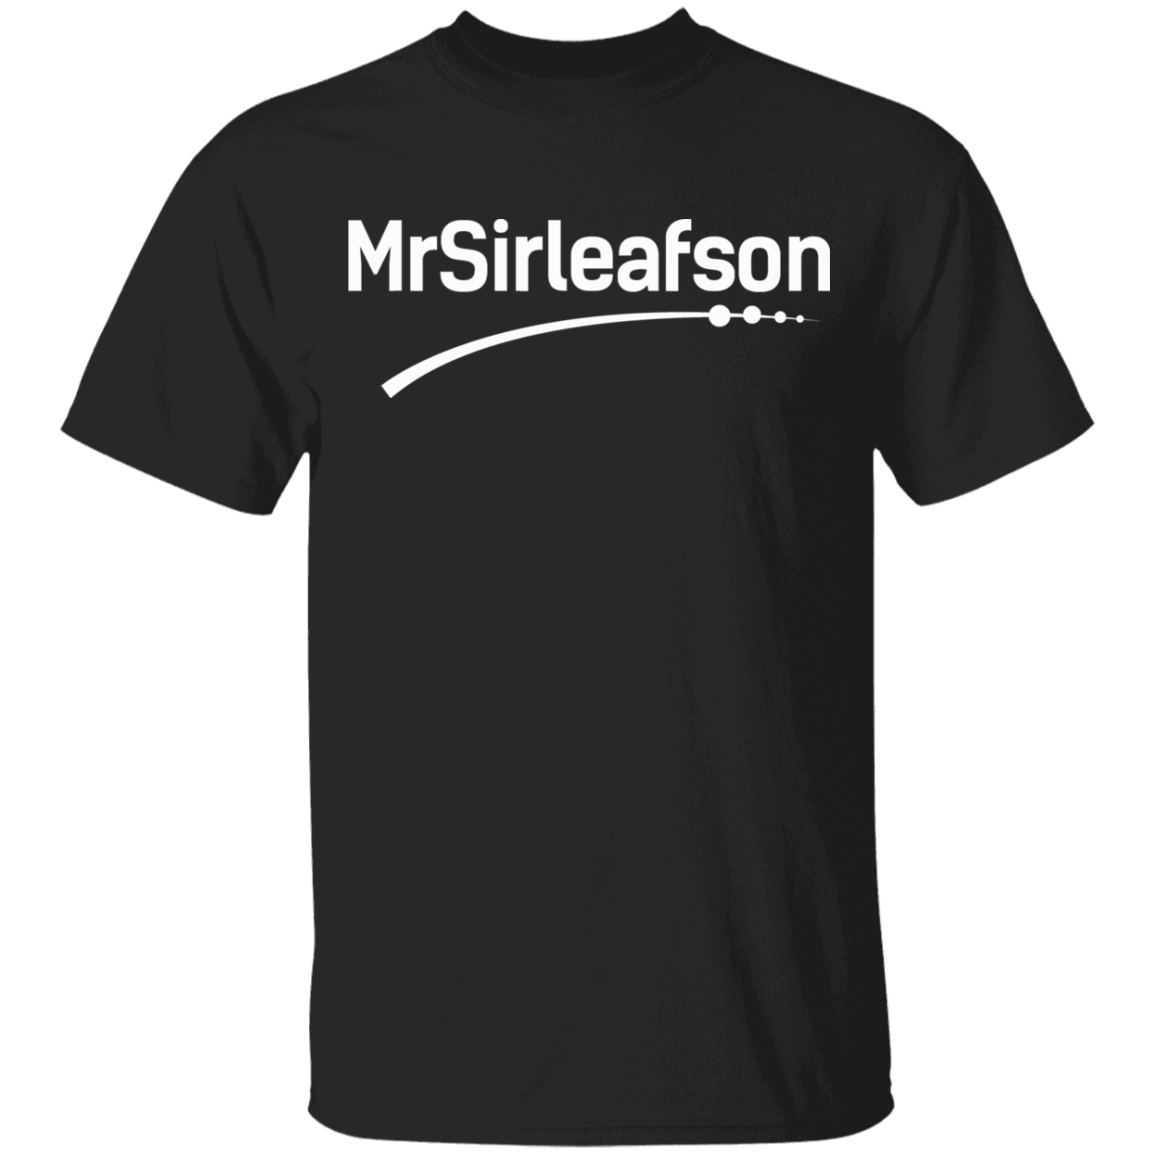 MrSirleafson Youth 5.3 oz 100% Cotton T-Shirt